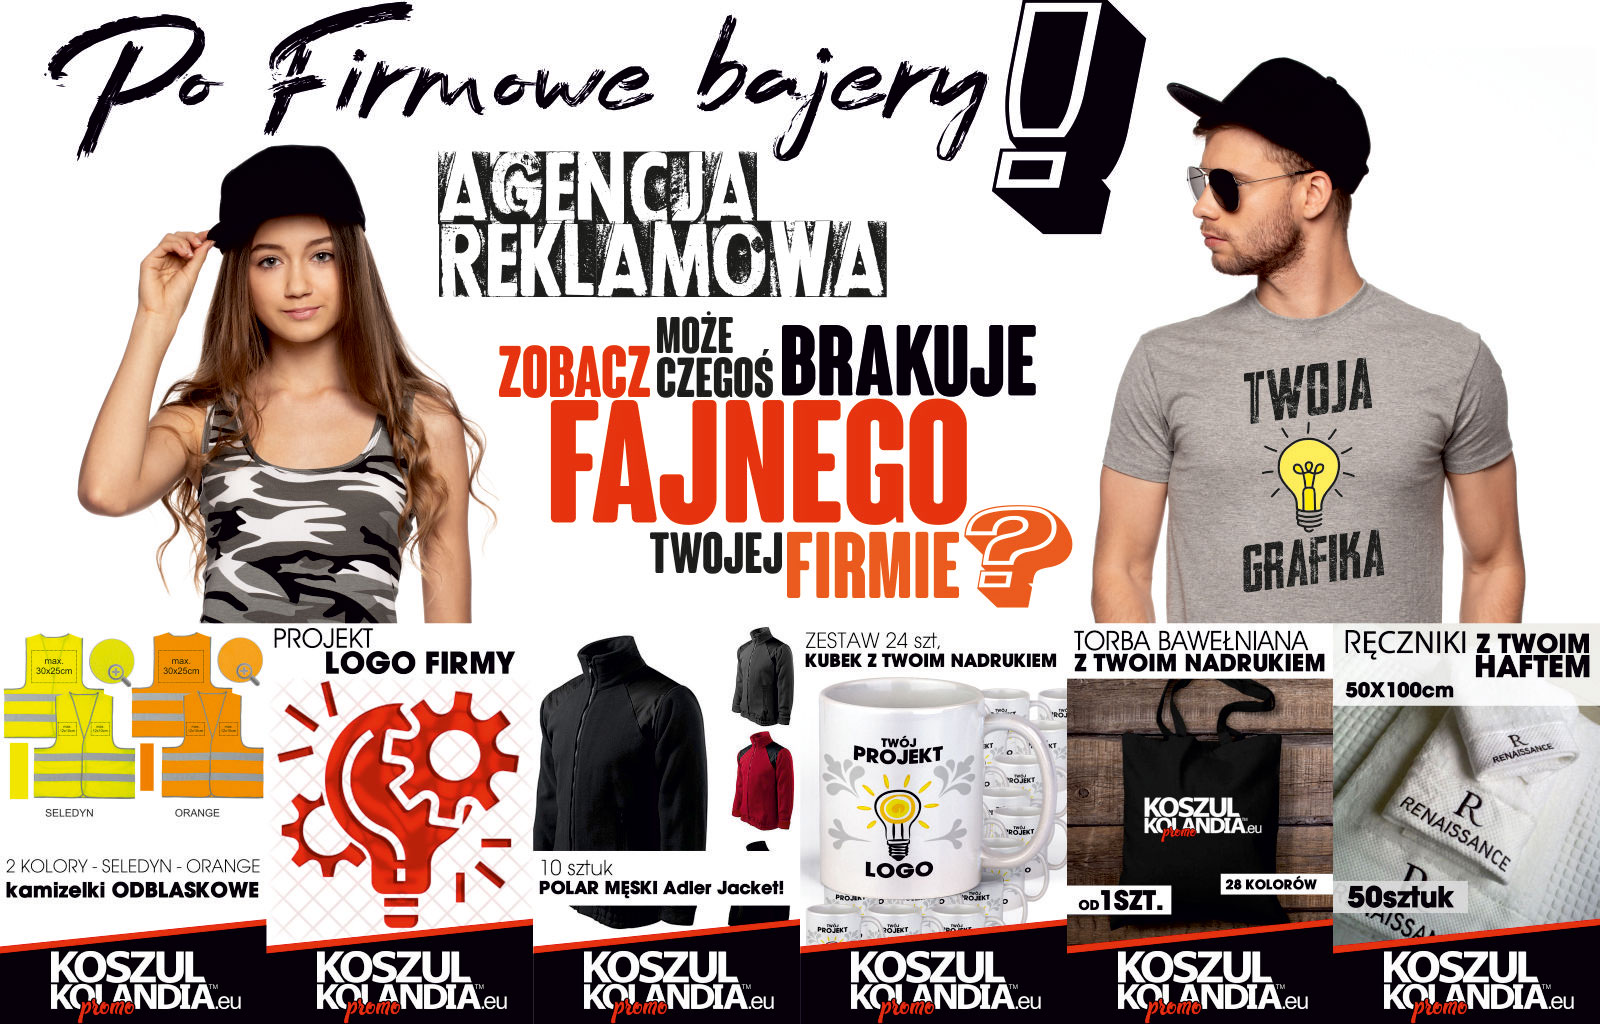 agencja reklamowa koszulkolandiaEU PROMO Tychy